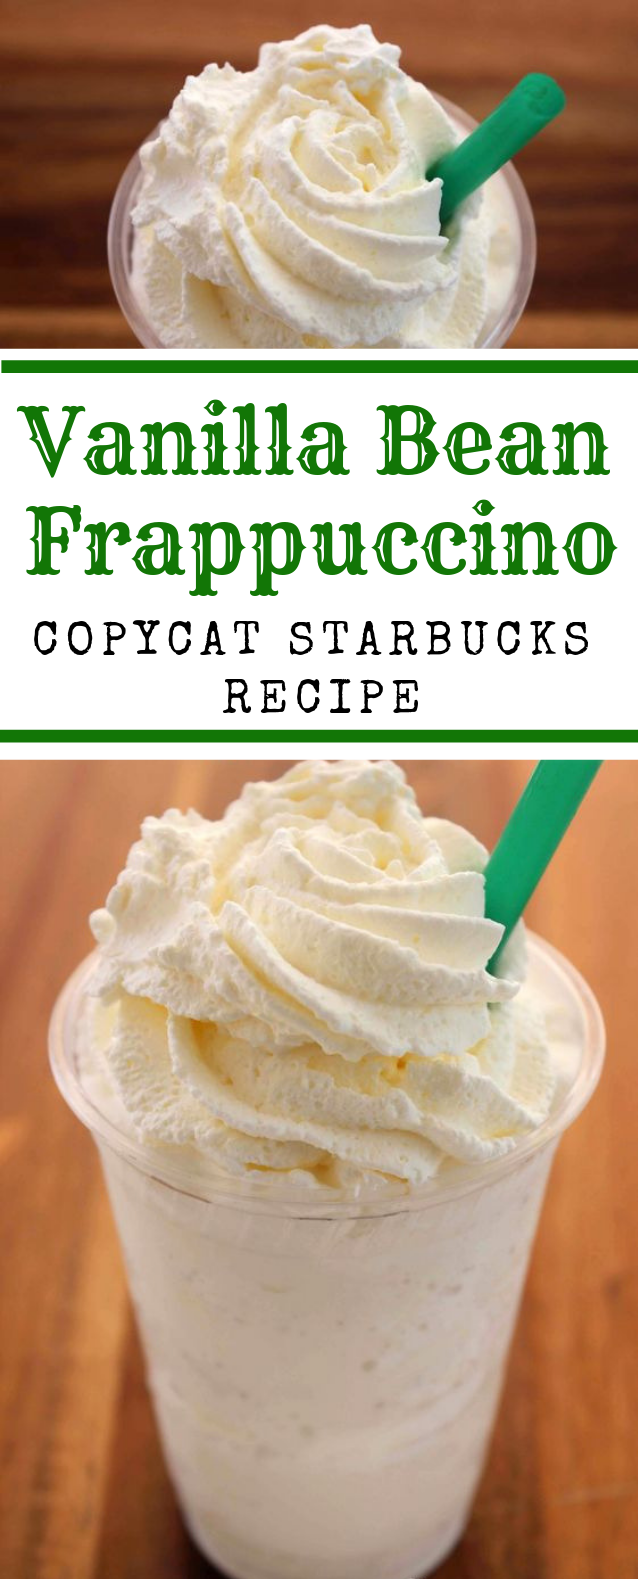 Vanilla Bean Frappuccino | Copycat Starbucks Recipe #Starbucks #Copycat